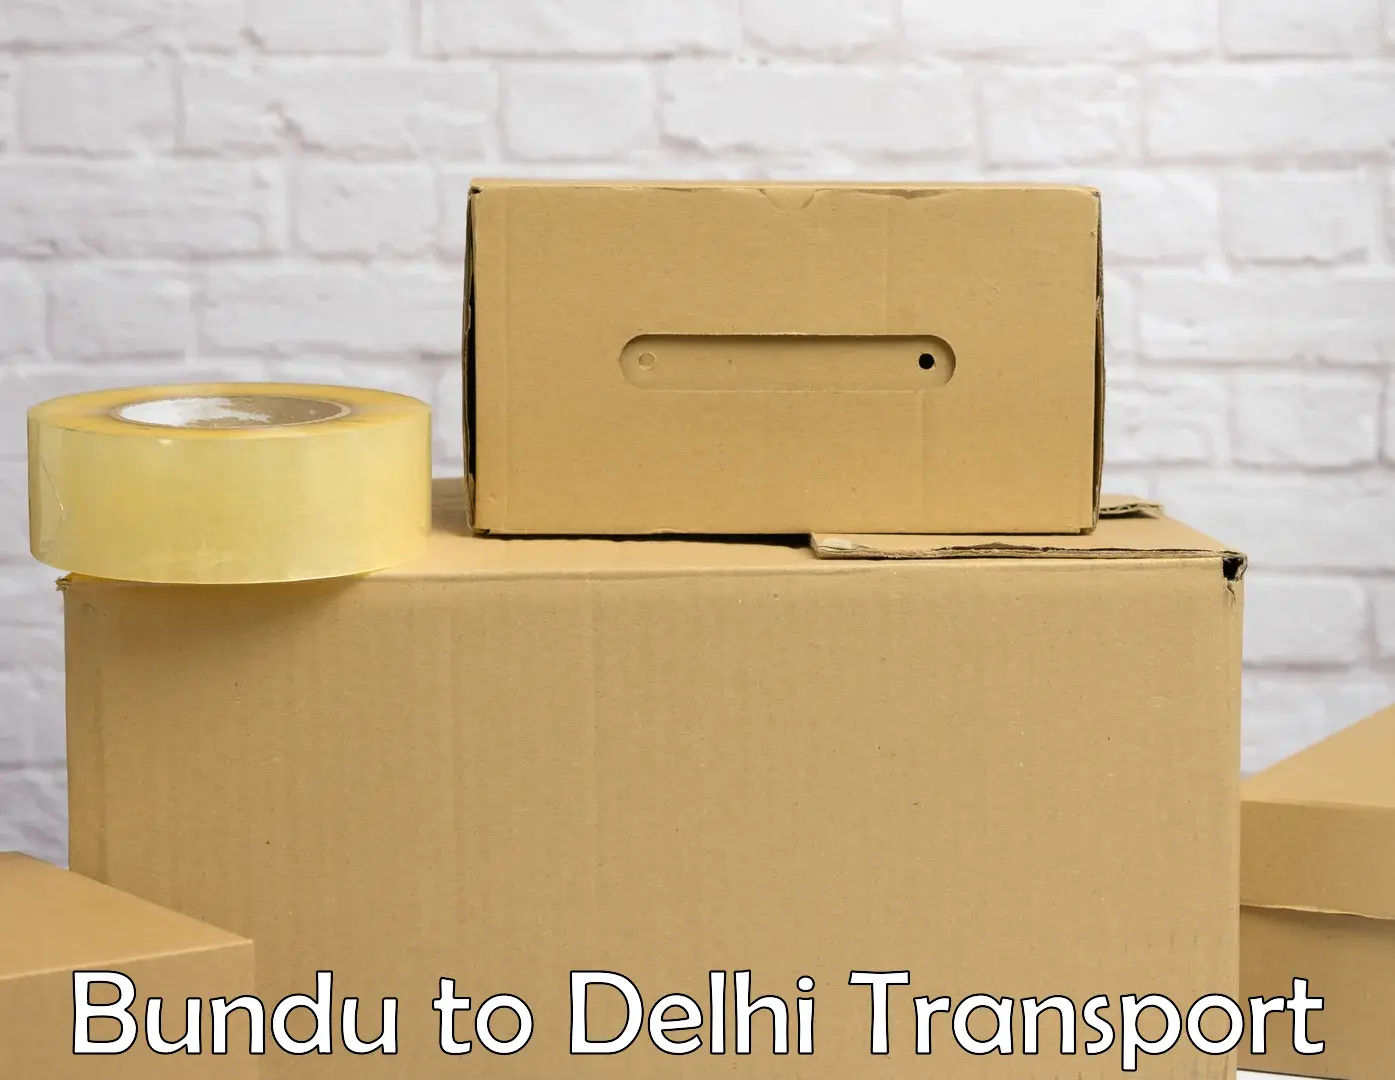 Sending bike to another city Bundu to University of Delhi